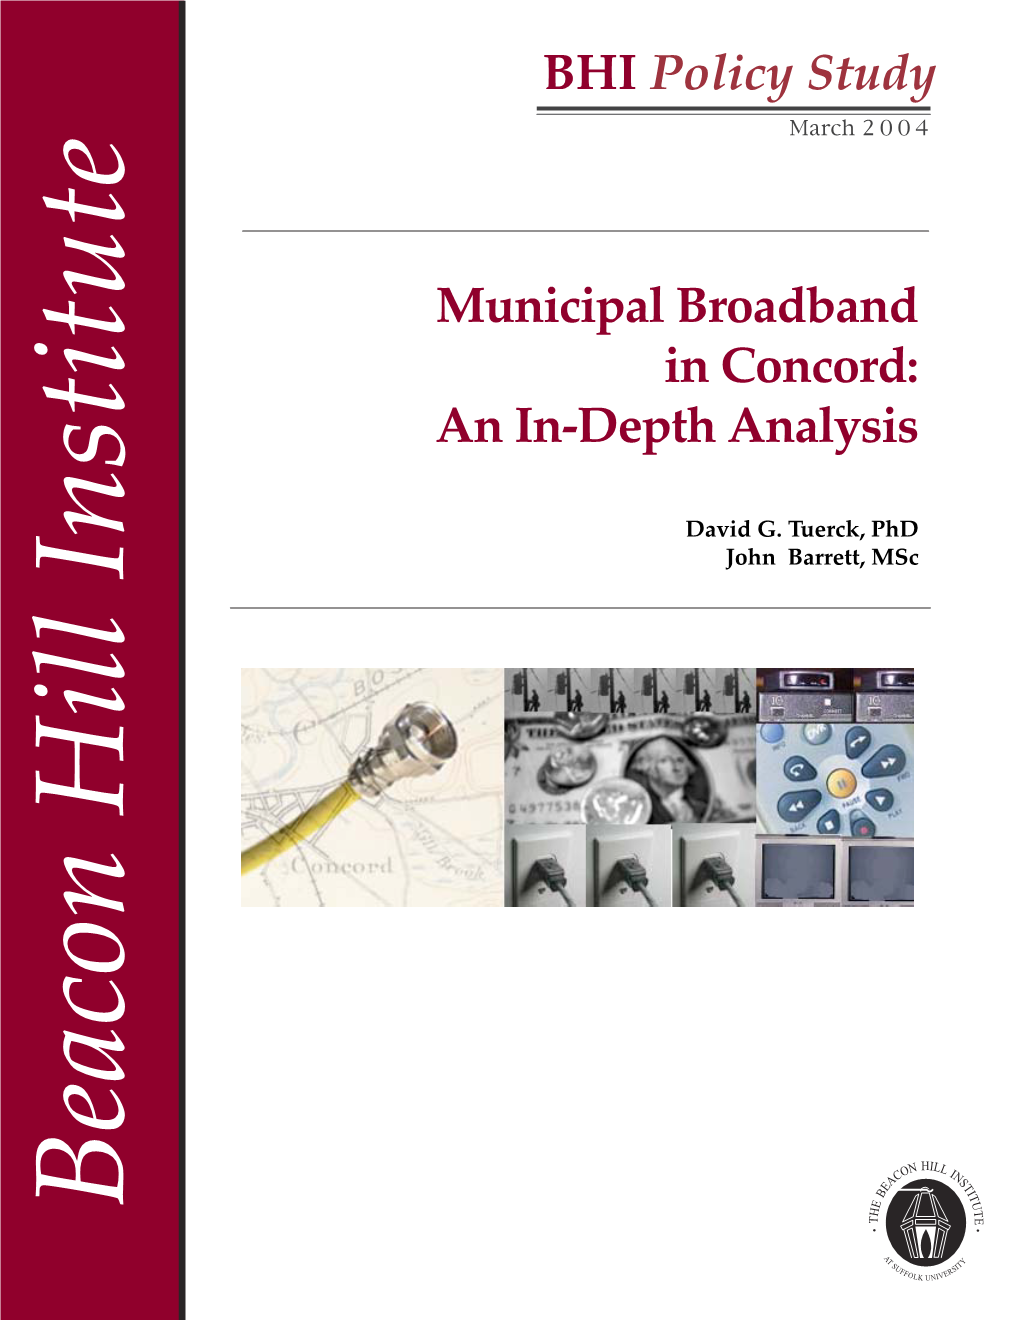 Municipal Broadband in Concord: an In-Depth Analysis